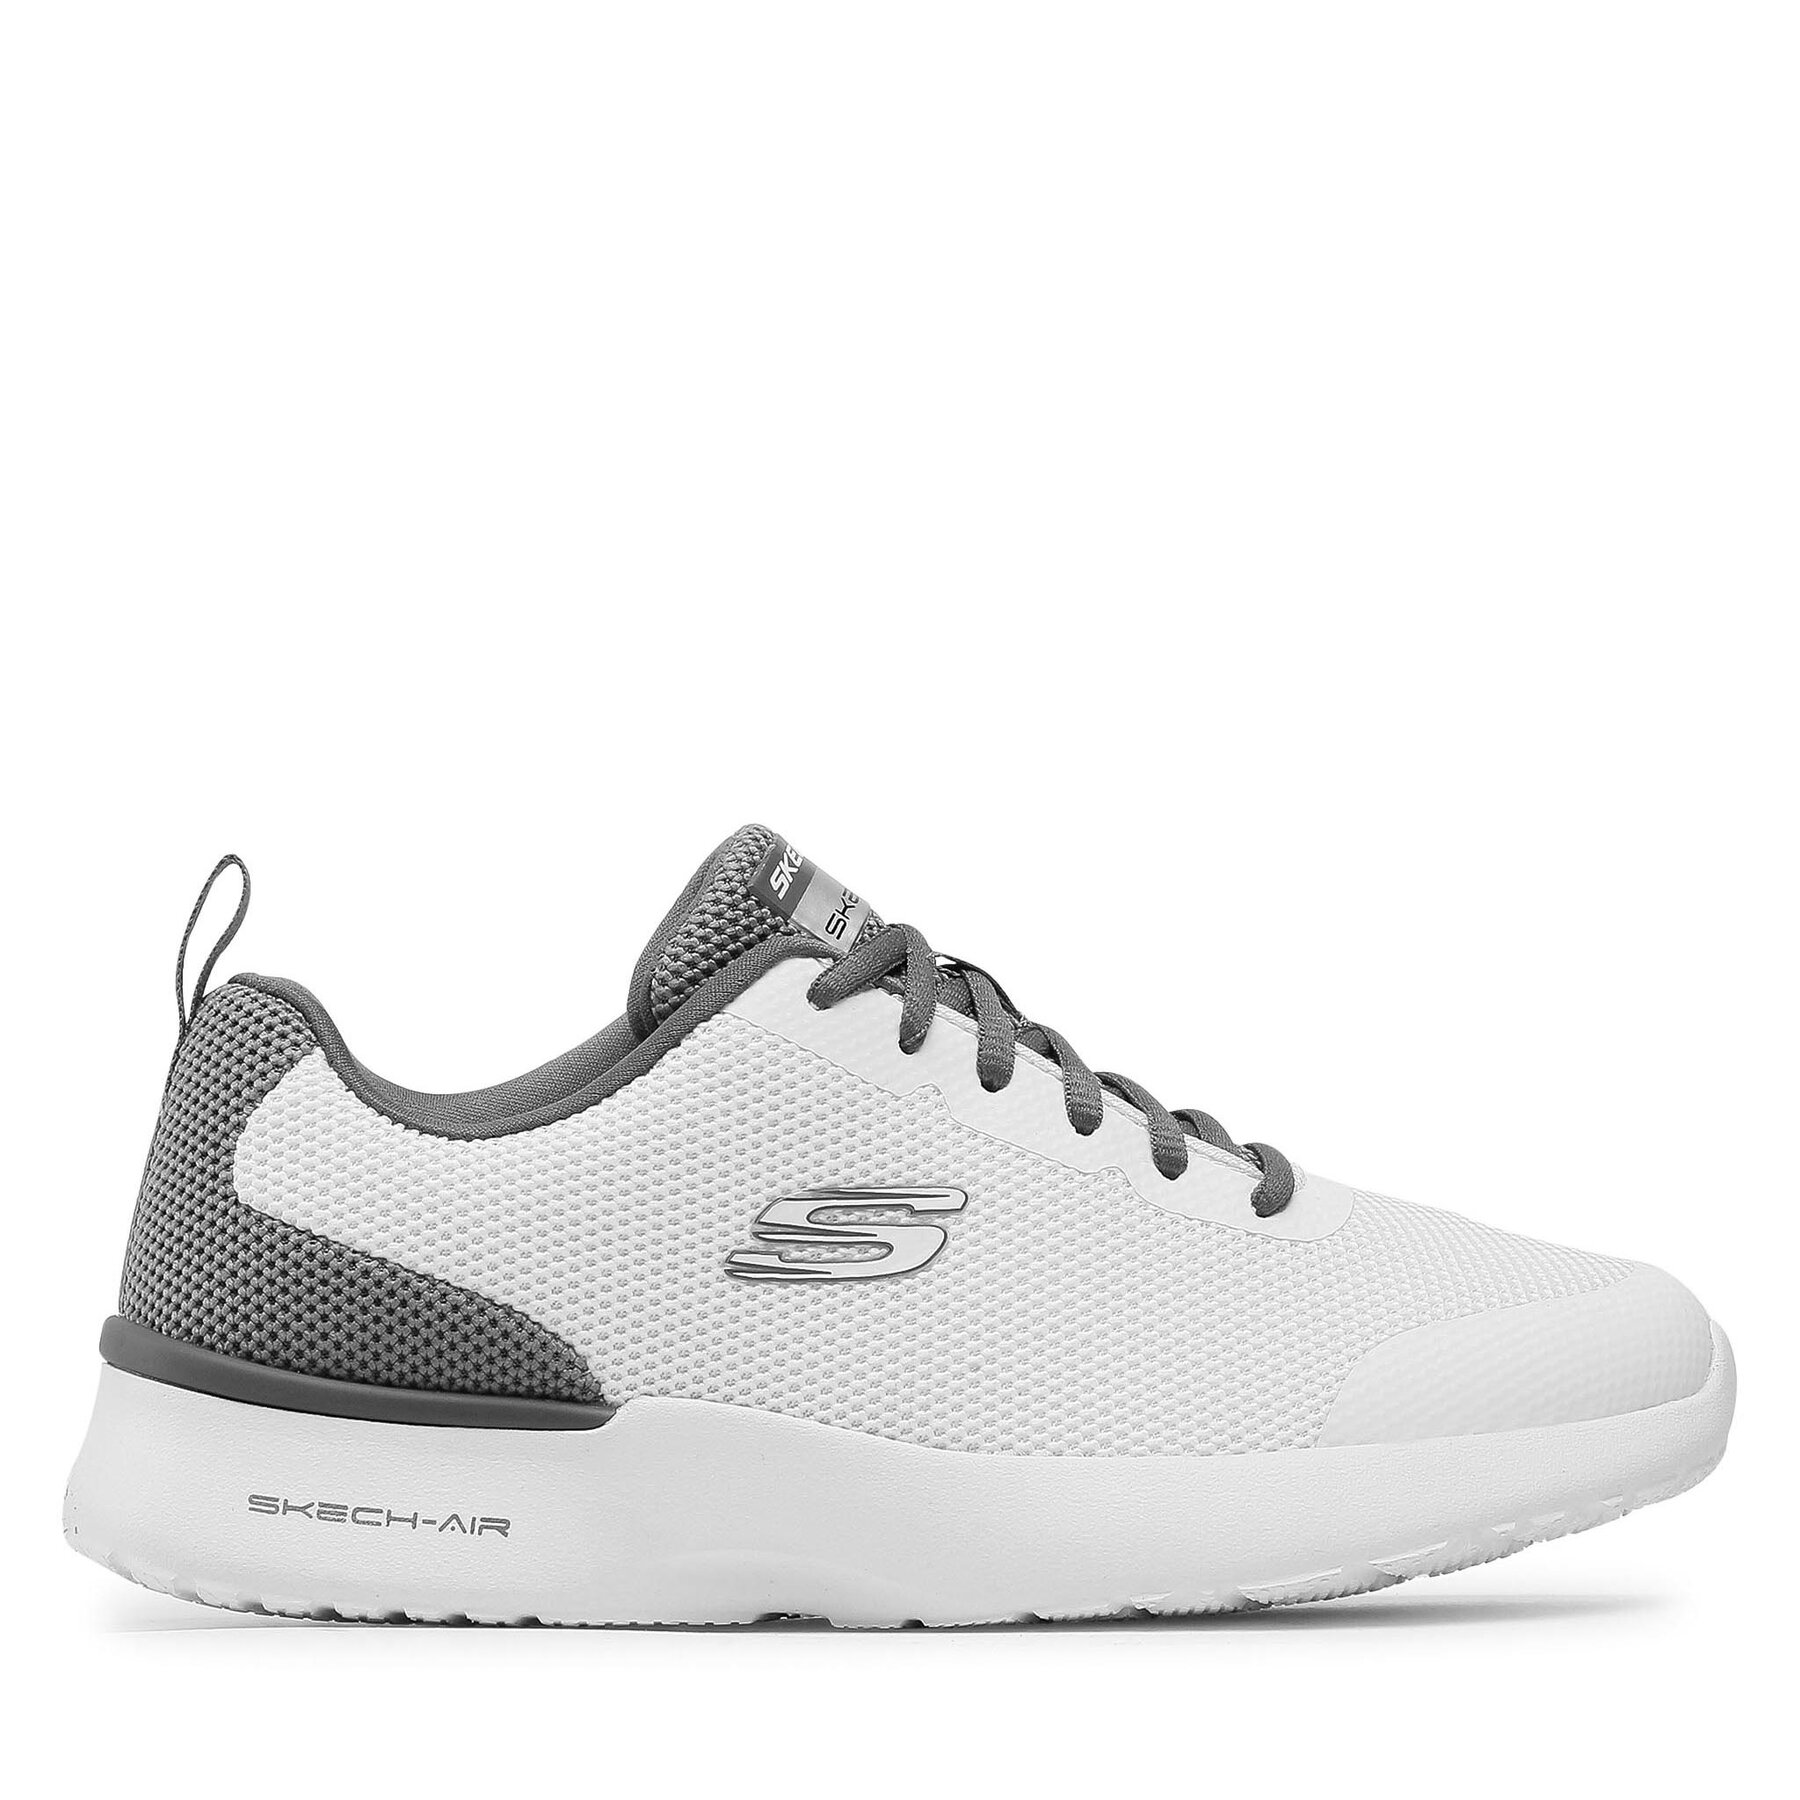 Schuhe Skechers Winly 232007/WGRY White/Light Gray von Skechers